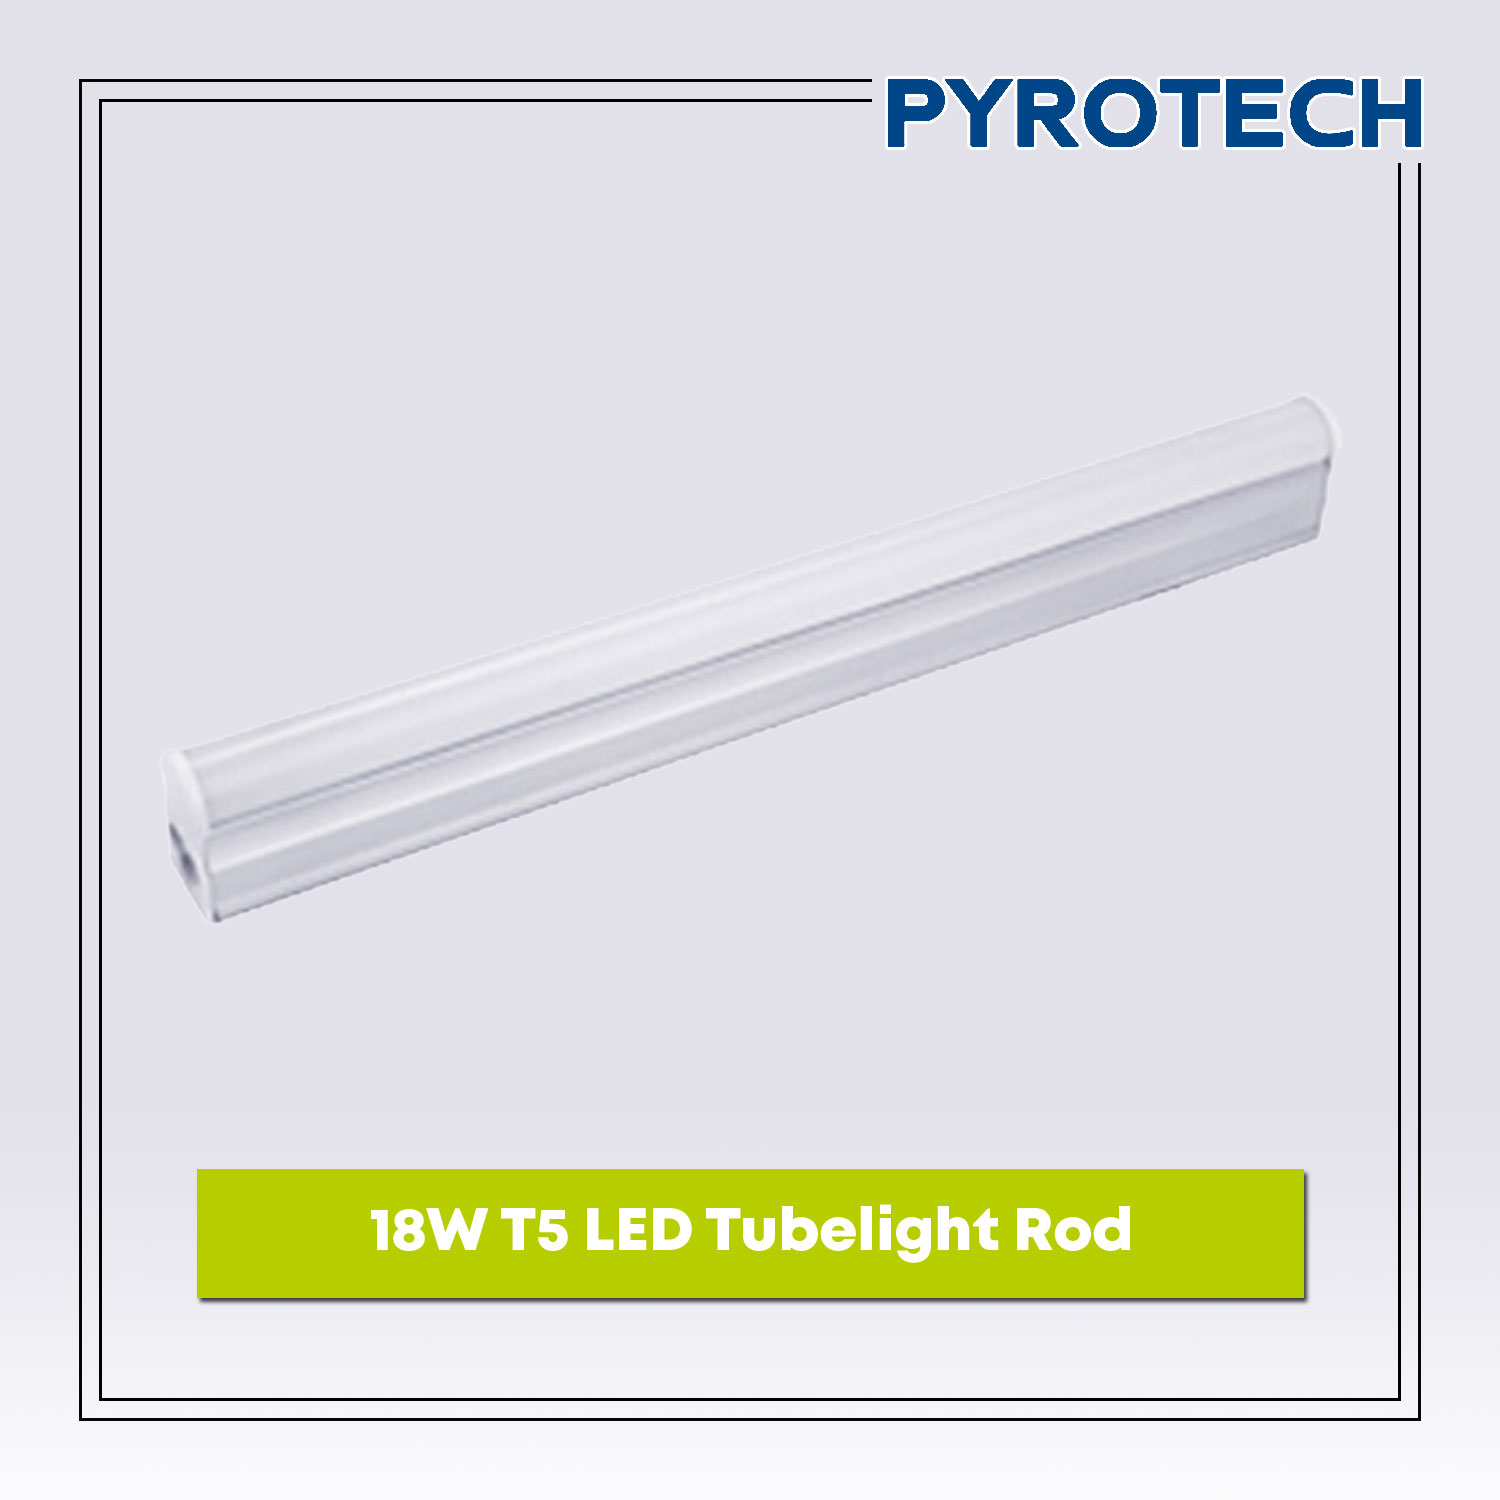 18 W T5 Led Tube Light Rod Manufacturer Exporter India, Best Quality